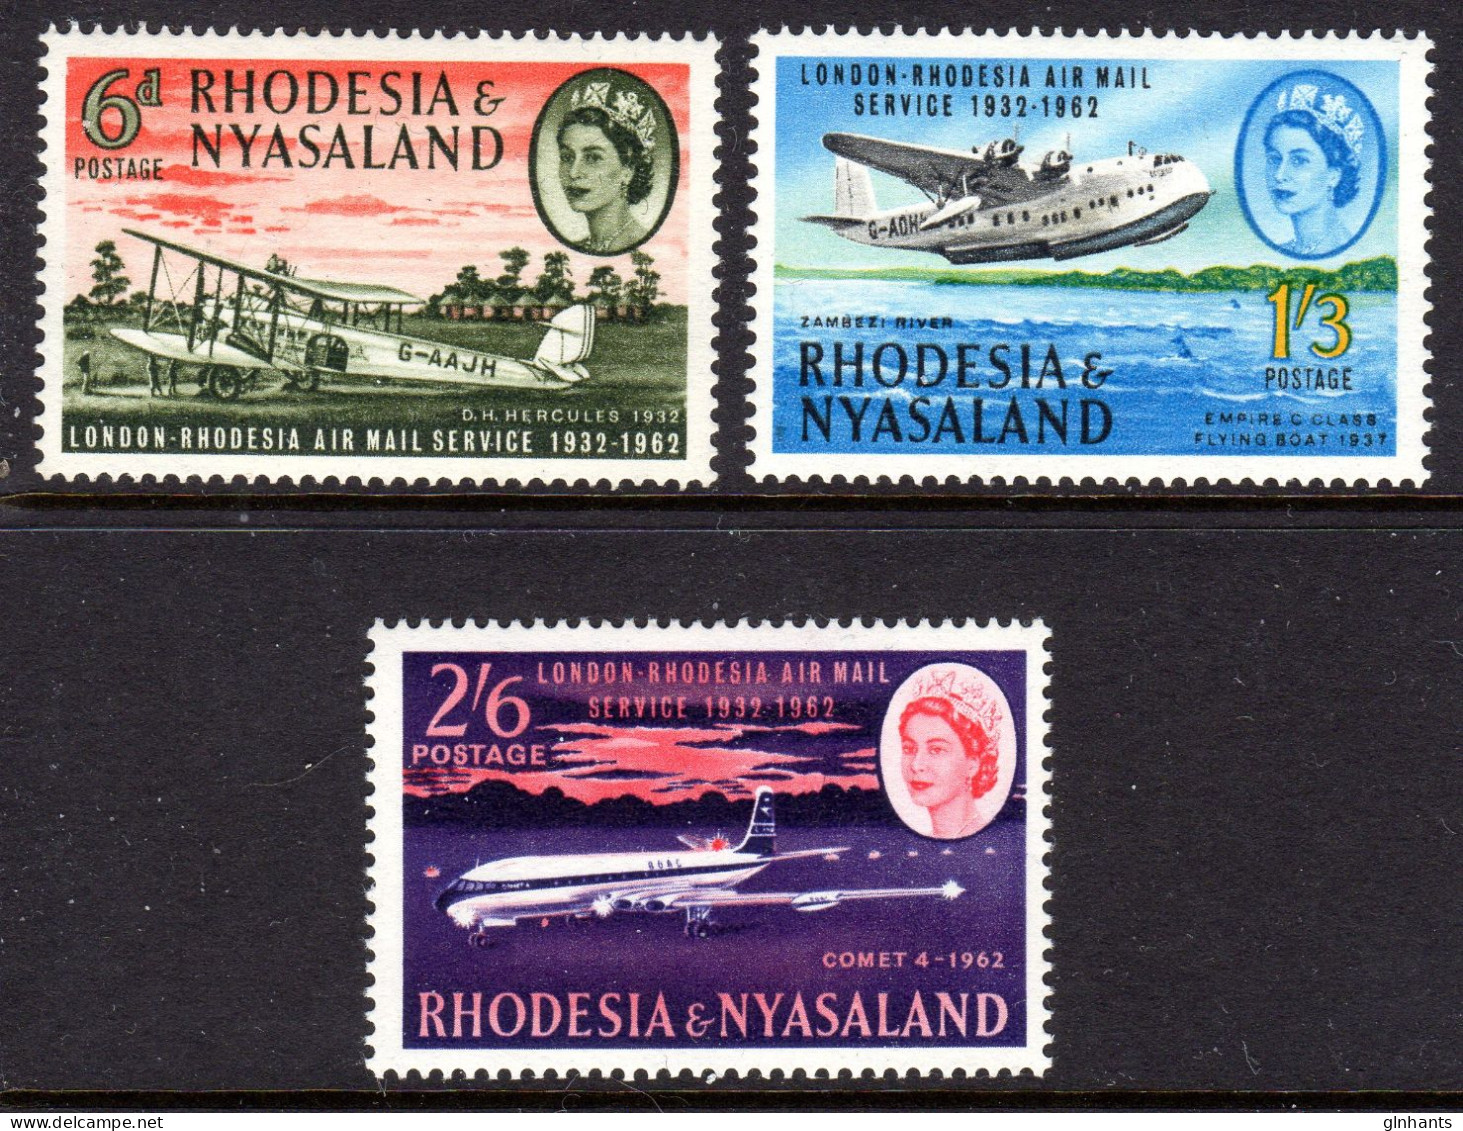 RHODESIA & NYASALAND - 1962 AIRMAIL SERVICE ANNIVERSARY SET (3V) FINE LIGHTLY MOUNTED MINT LMM * SG 40-42 - Rhodesia & Nyasaland (1954-1963)